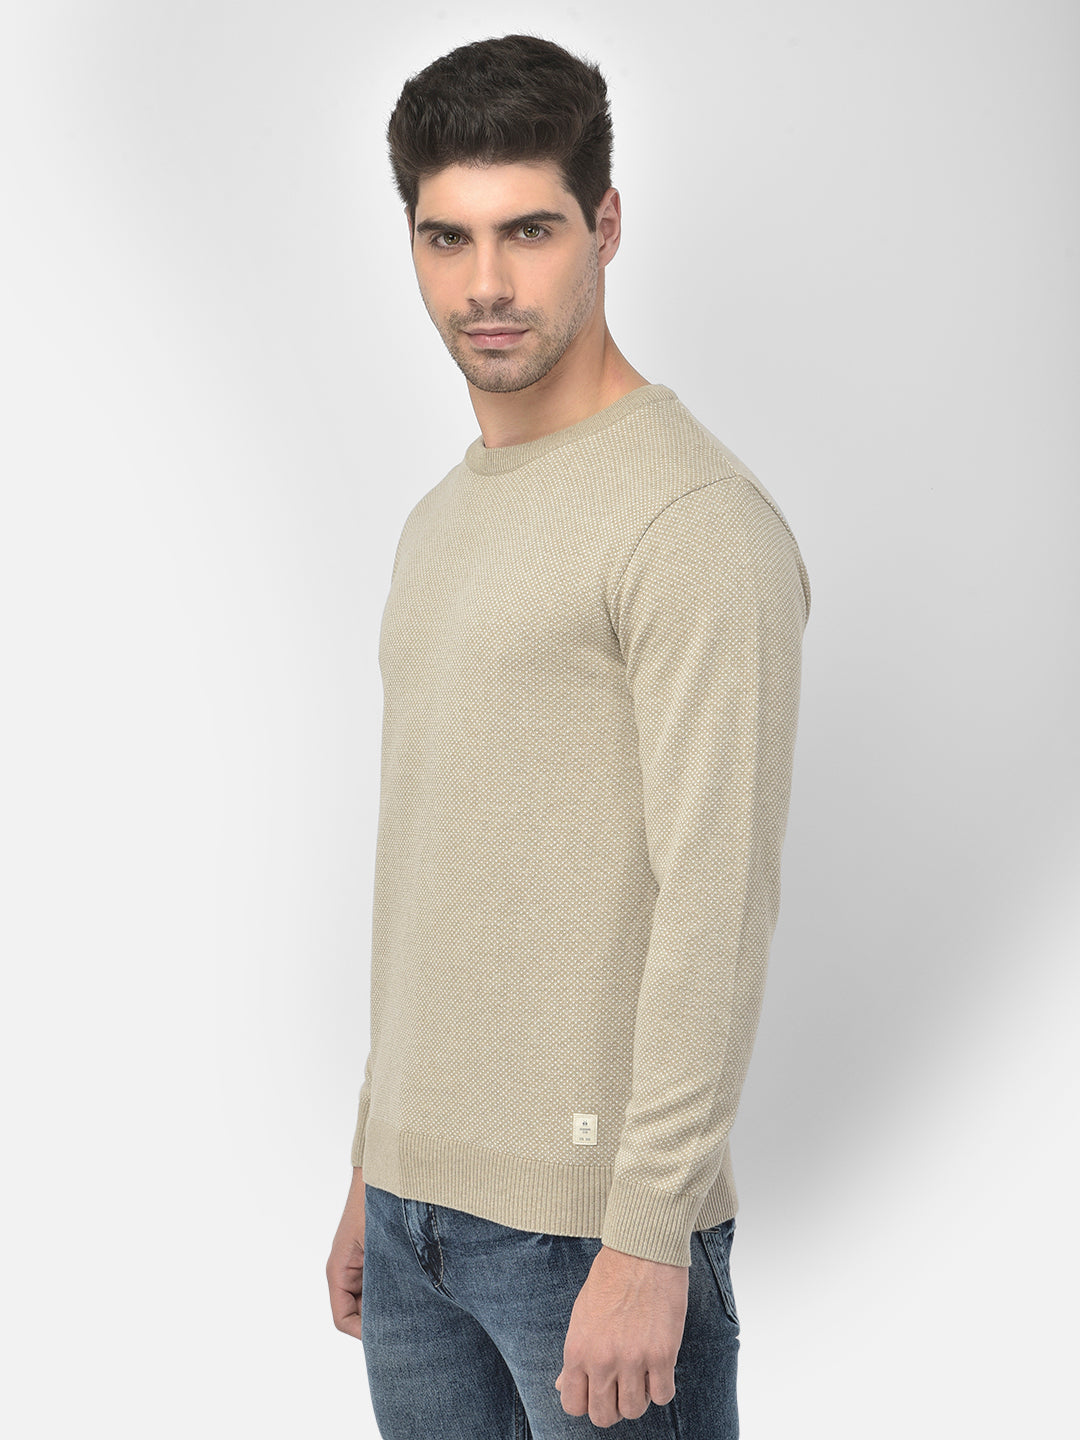 Beige Self Design Round Neck Sweater - Men Sweaters